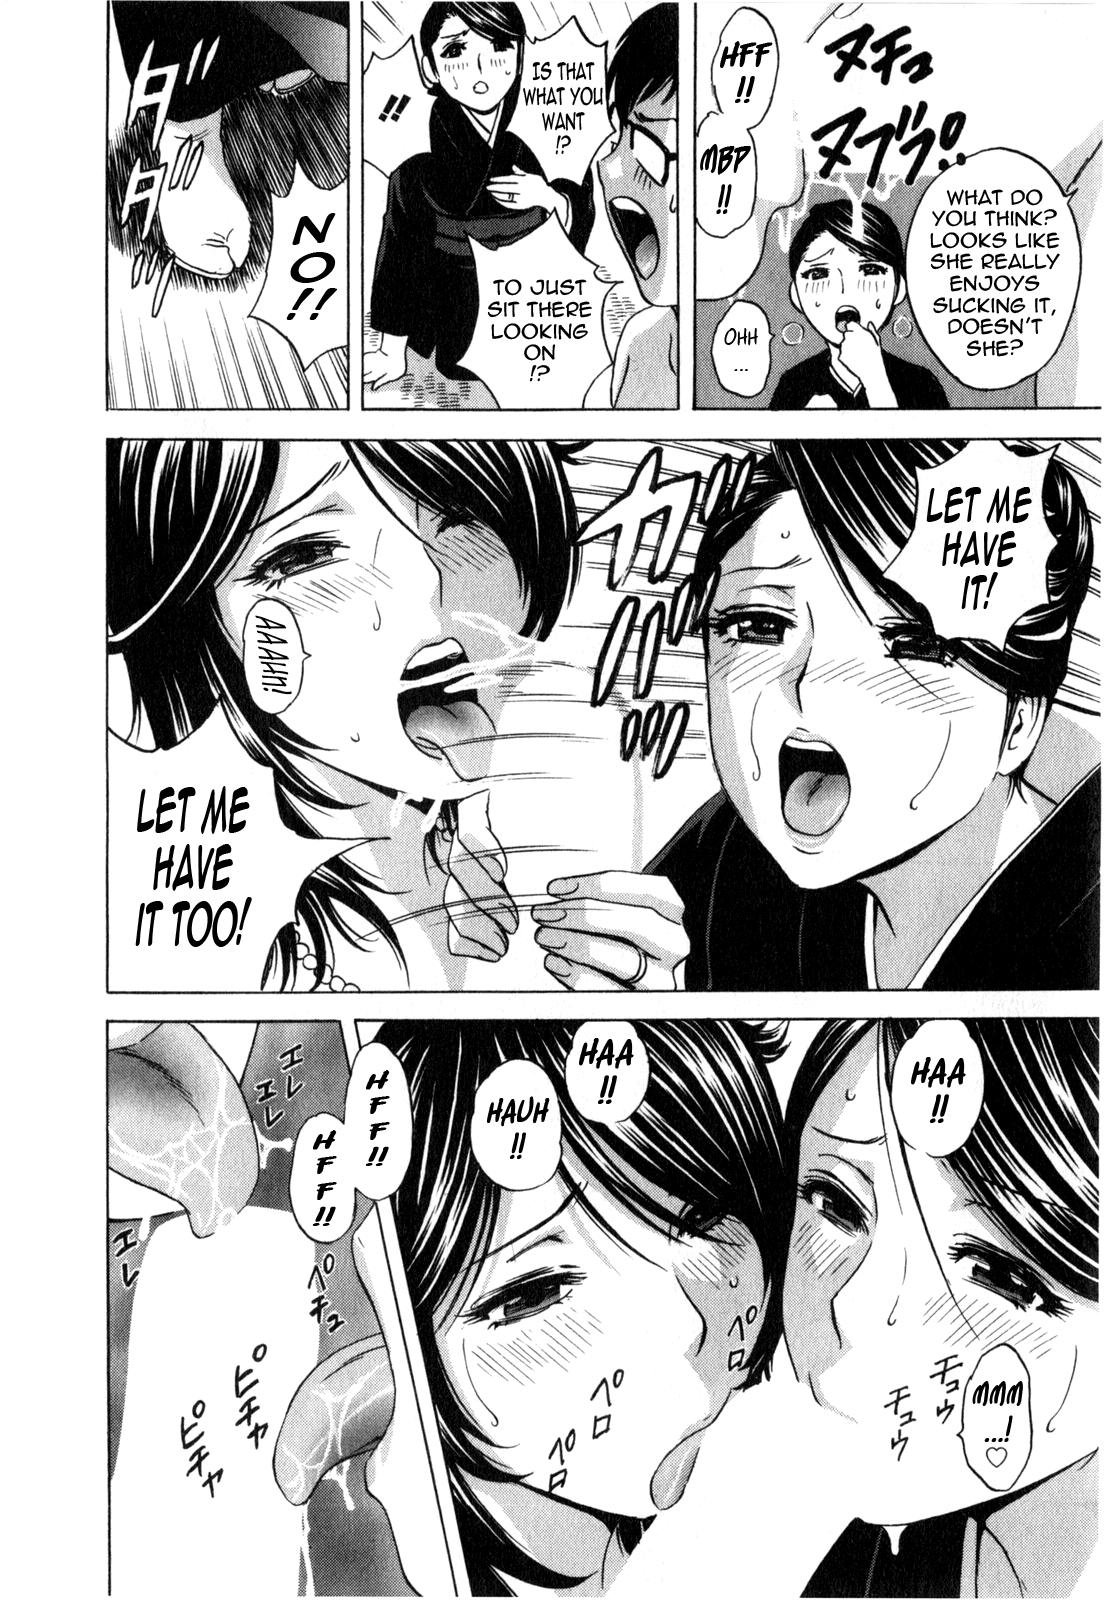 [Hidemaru] Life with Married Women Just Like a Manga 3 - Ch. 1-8 [English] {Tadanohito} 97